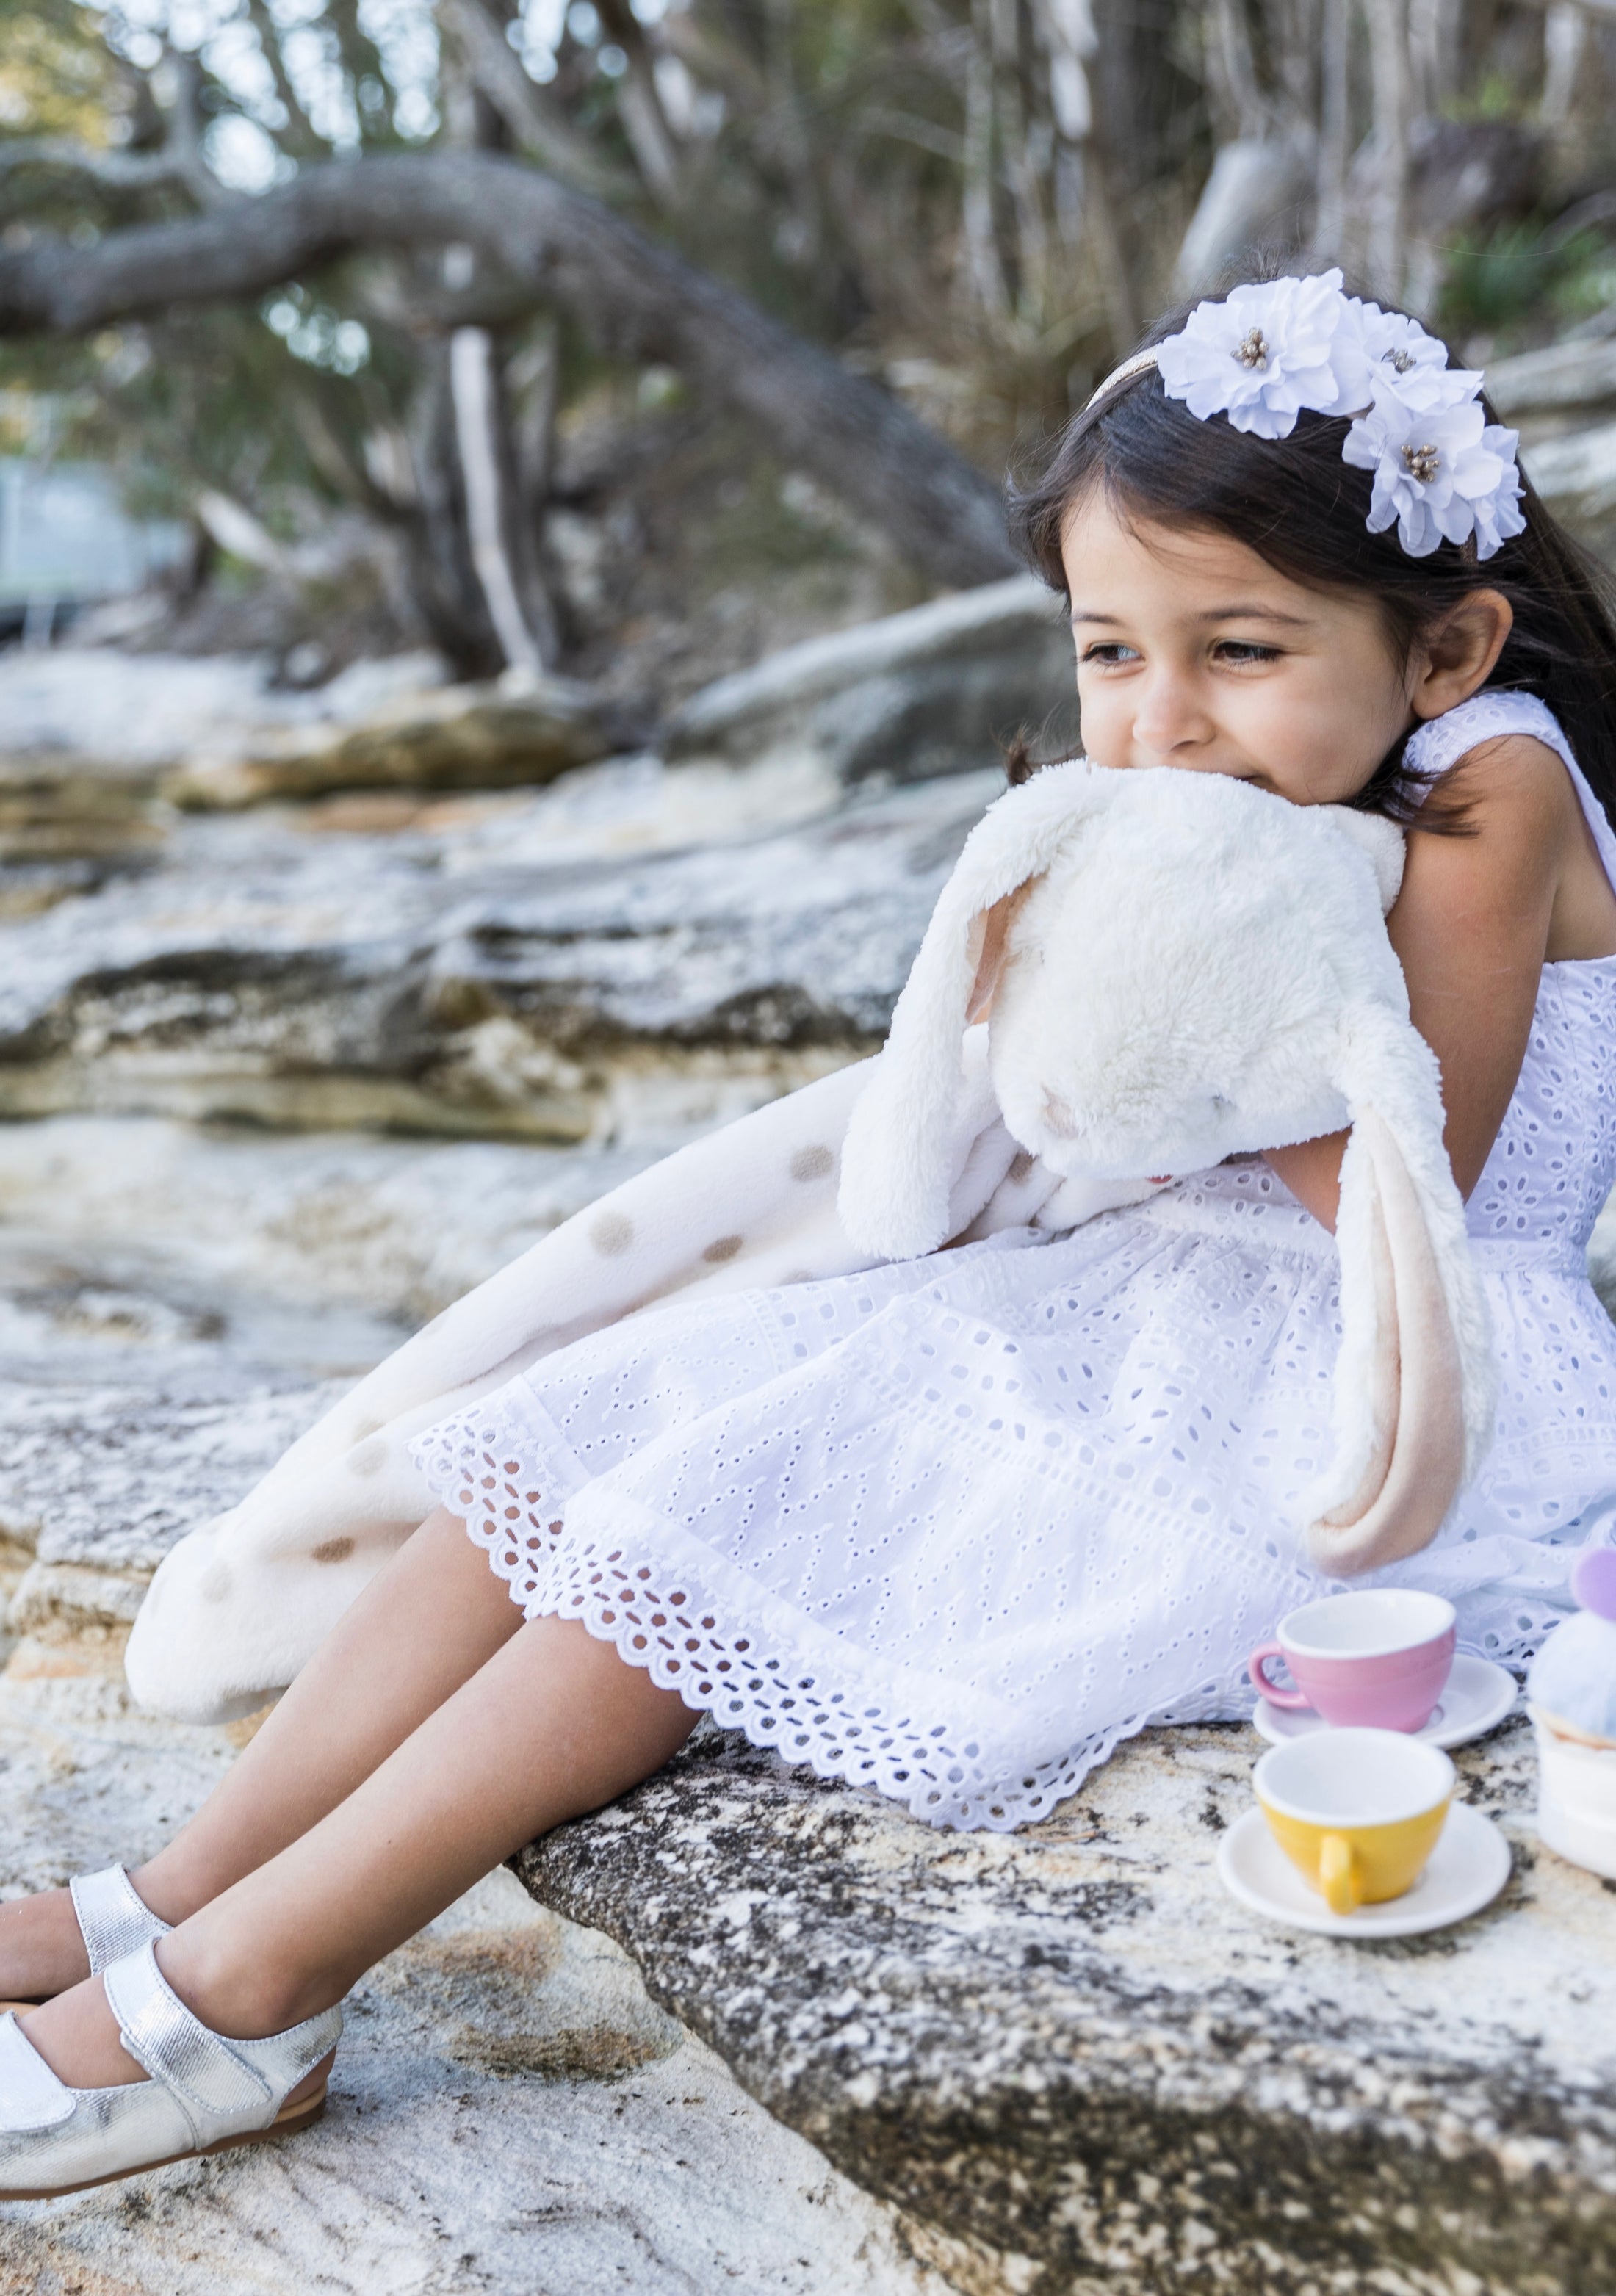 Ariel Bunny Dreams: Cream & Hazelnut Polka Dot Jumbo Comforter Blanket